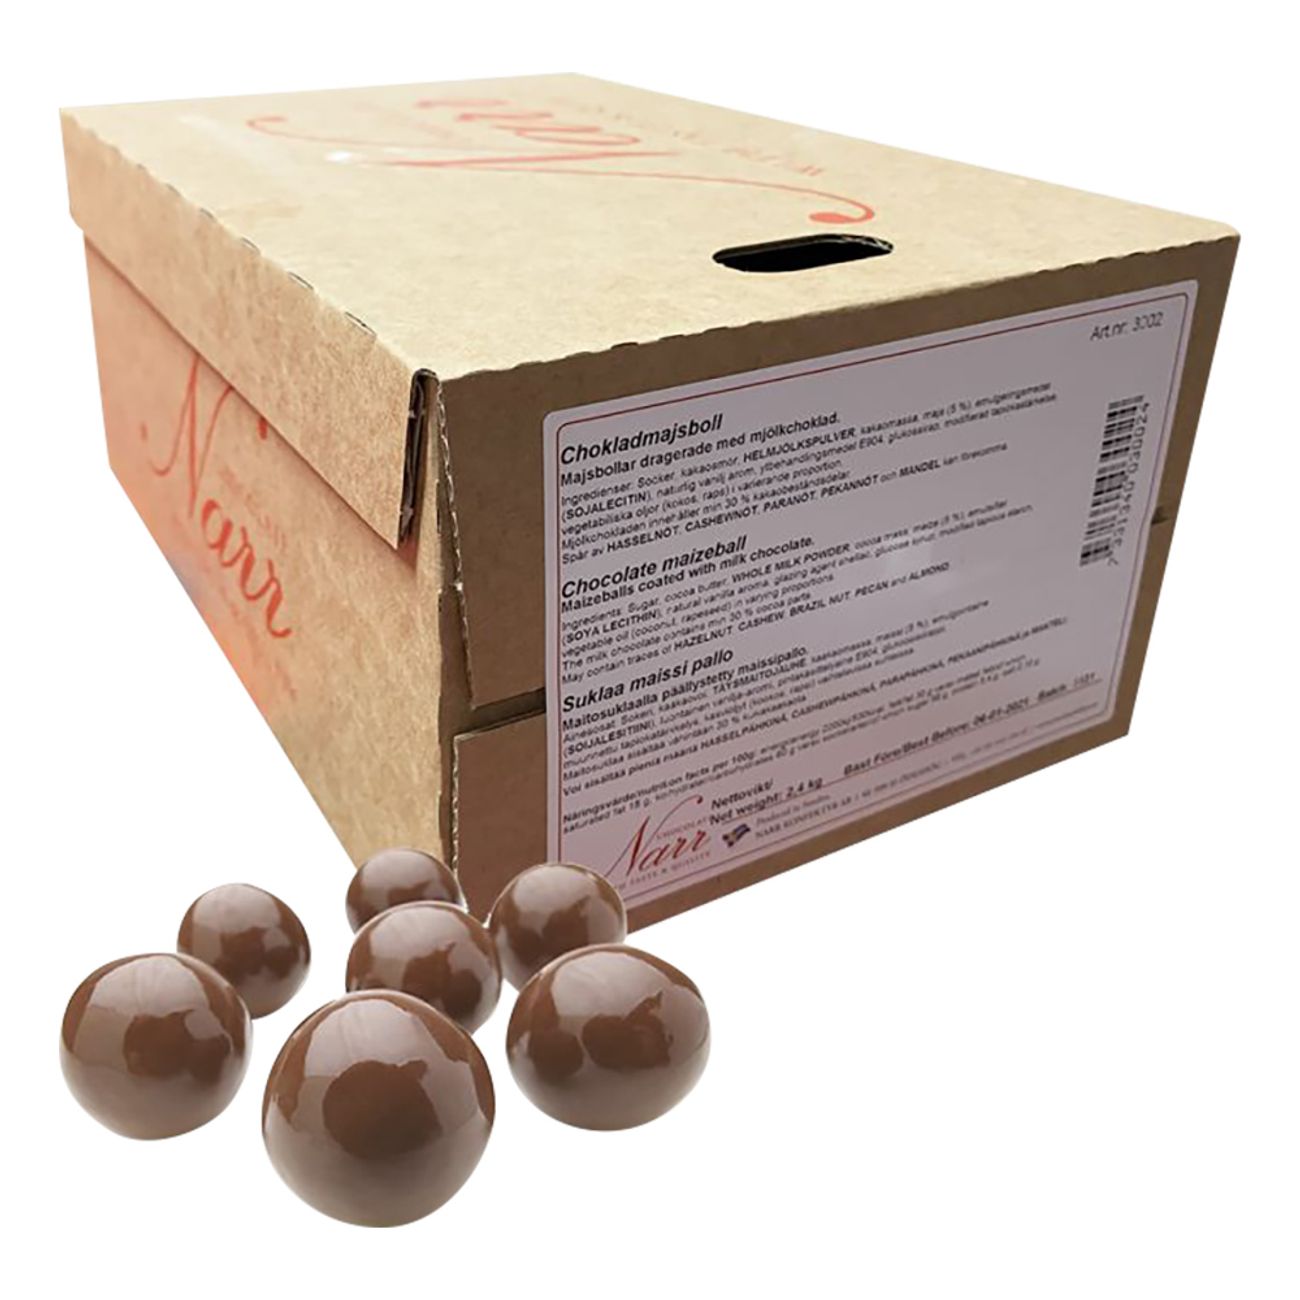 majsbollar-choklad-storpack-79059-2